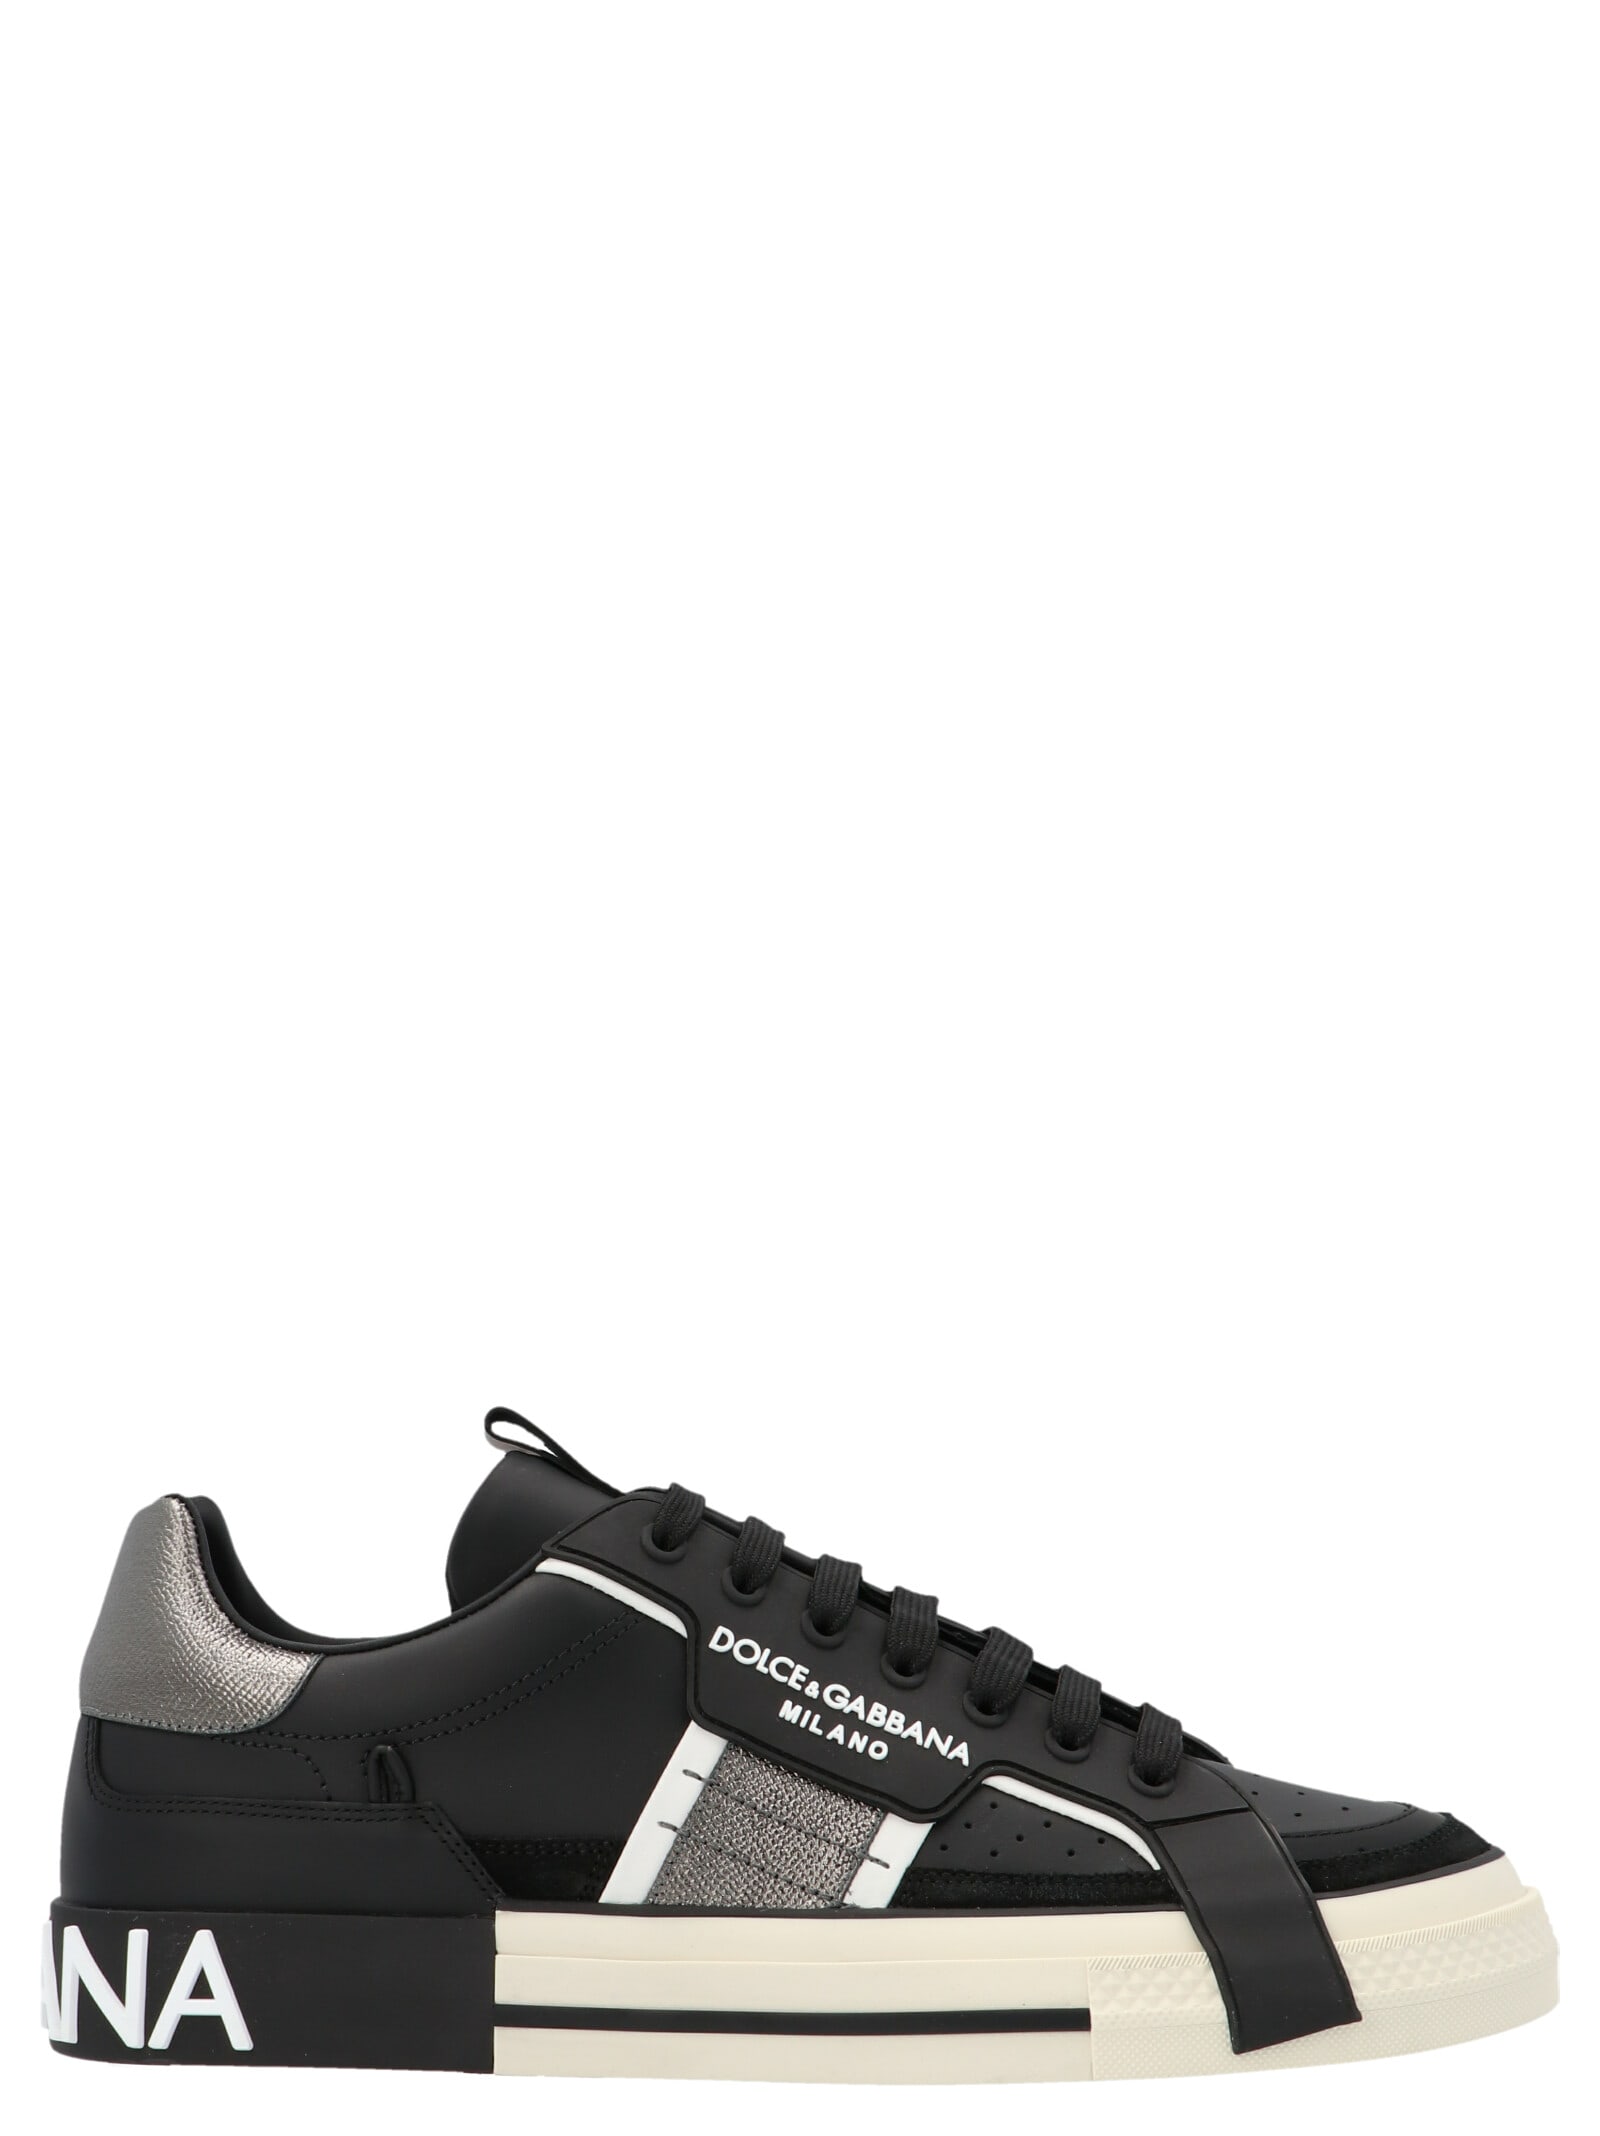 Dolce & Gabbana New Portofino Shoes In Black